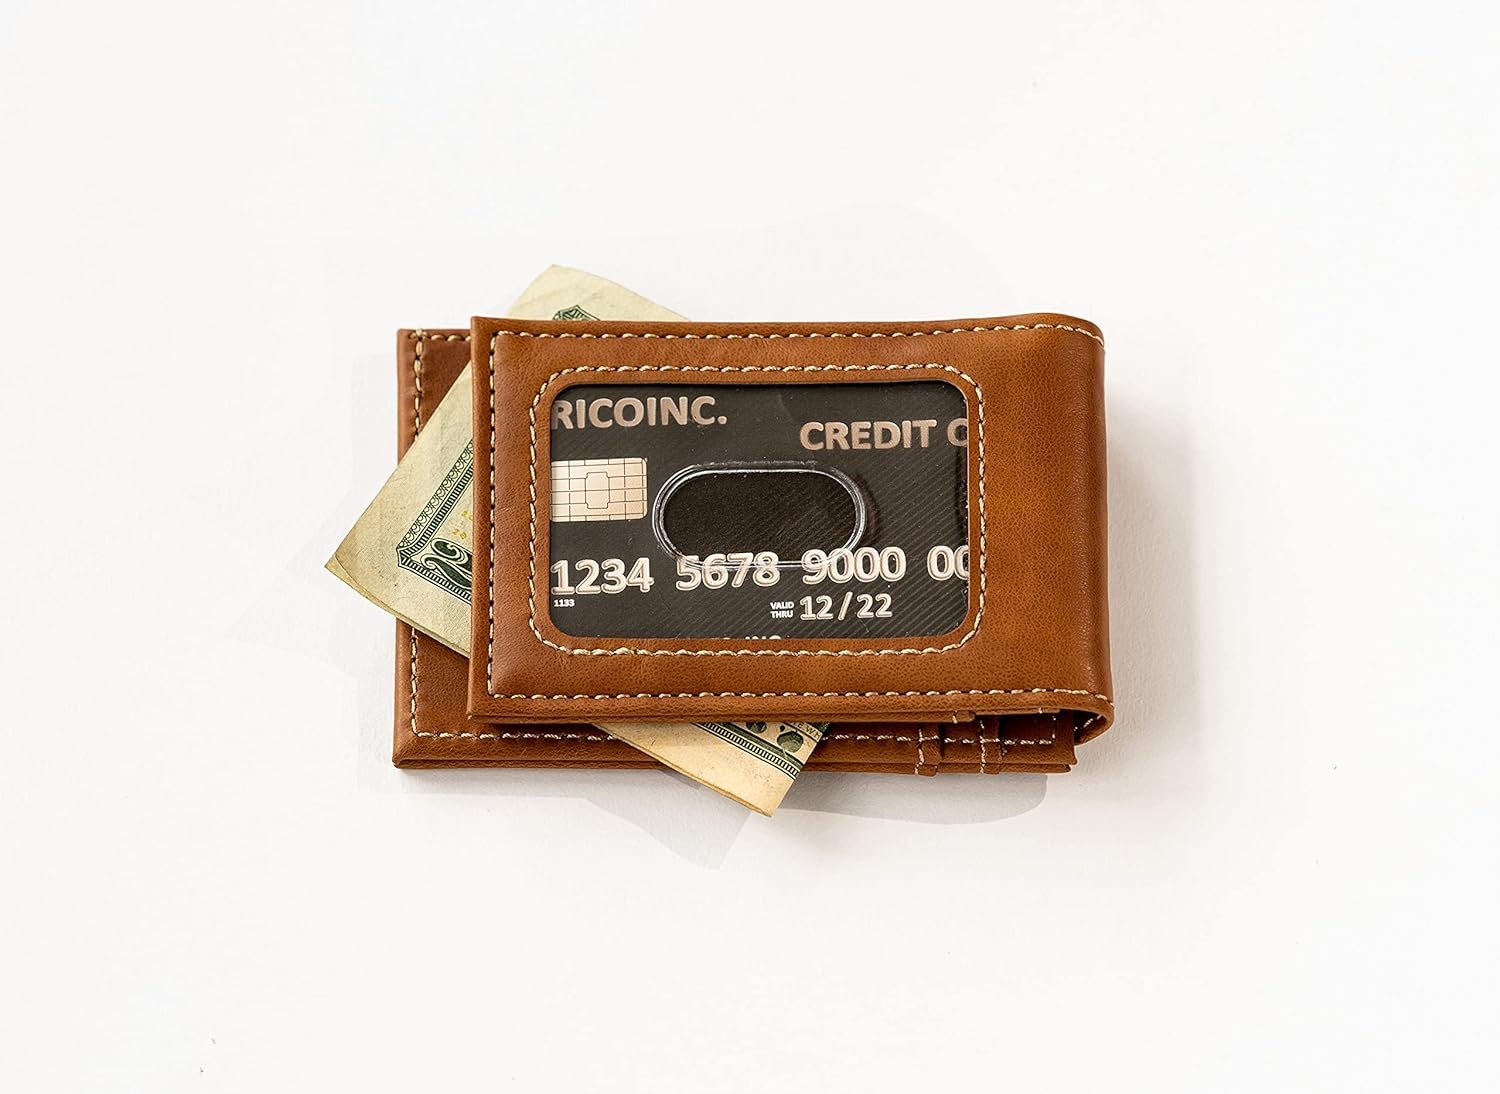 Las Vegas Raiders Premium Brown Leather Wallet, Front Pocket Magnetic Money Clip, Laser Engraved, Vegan